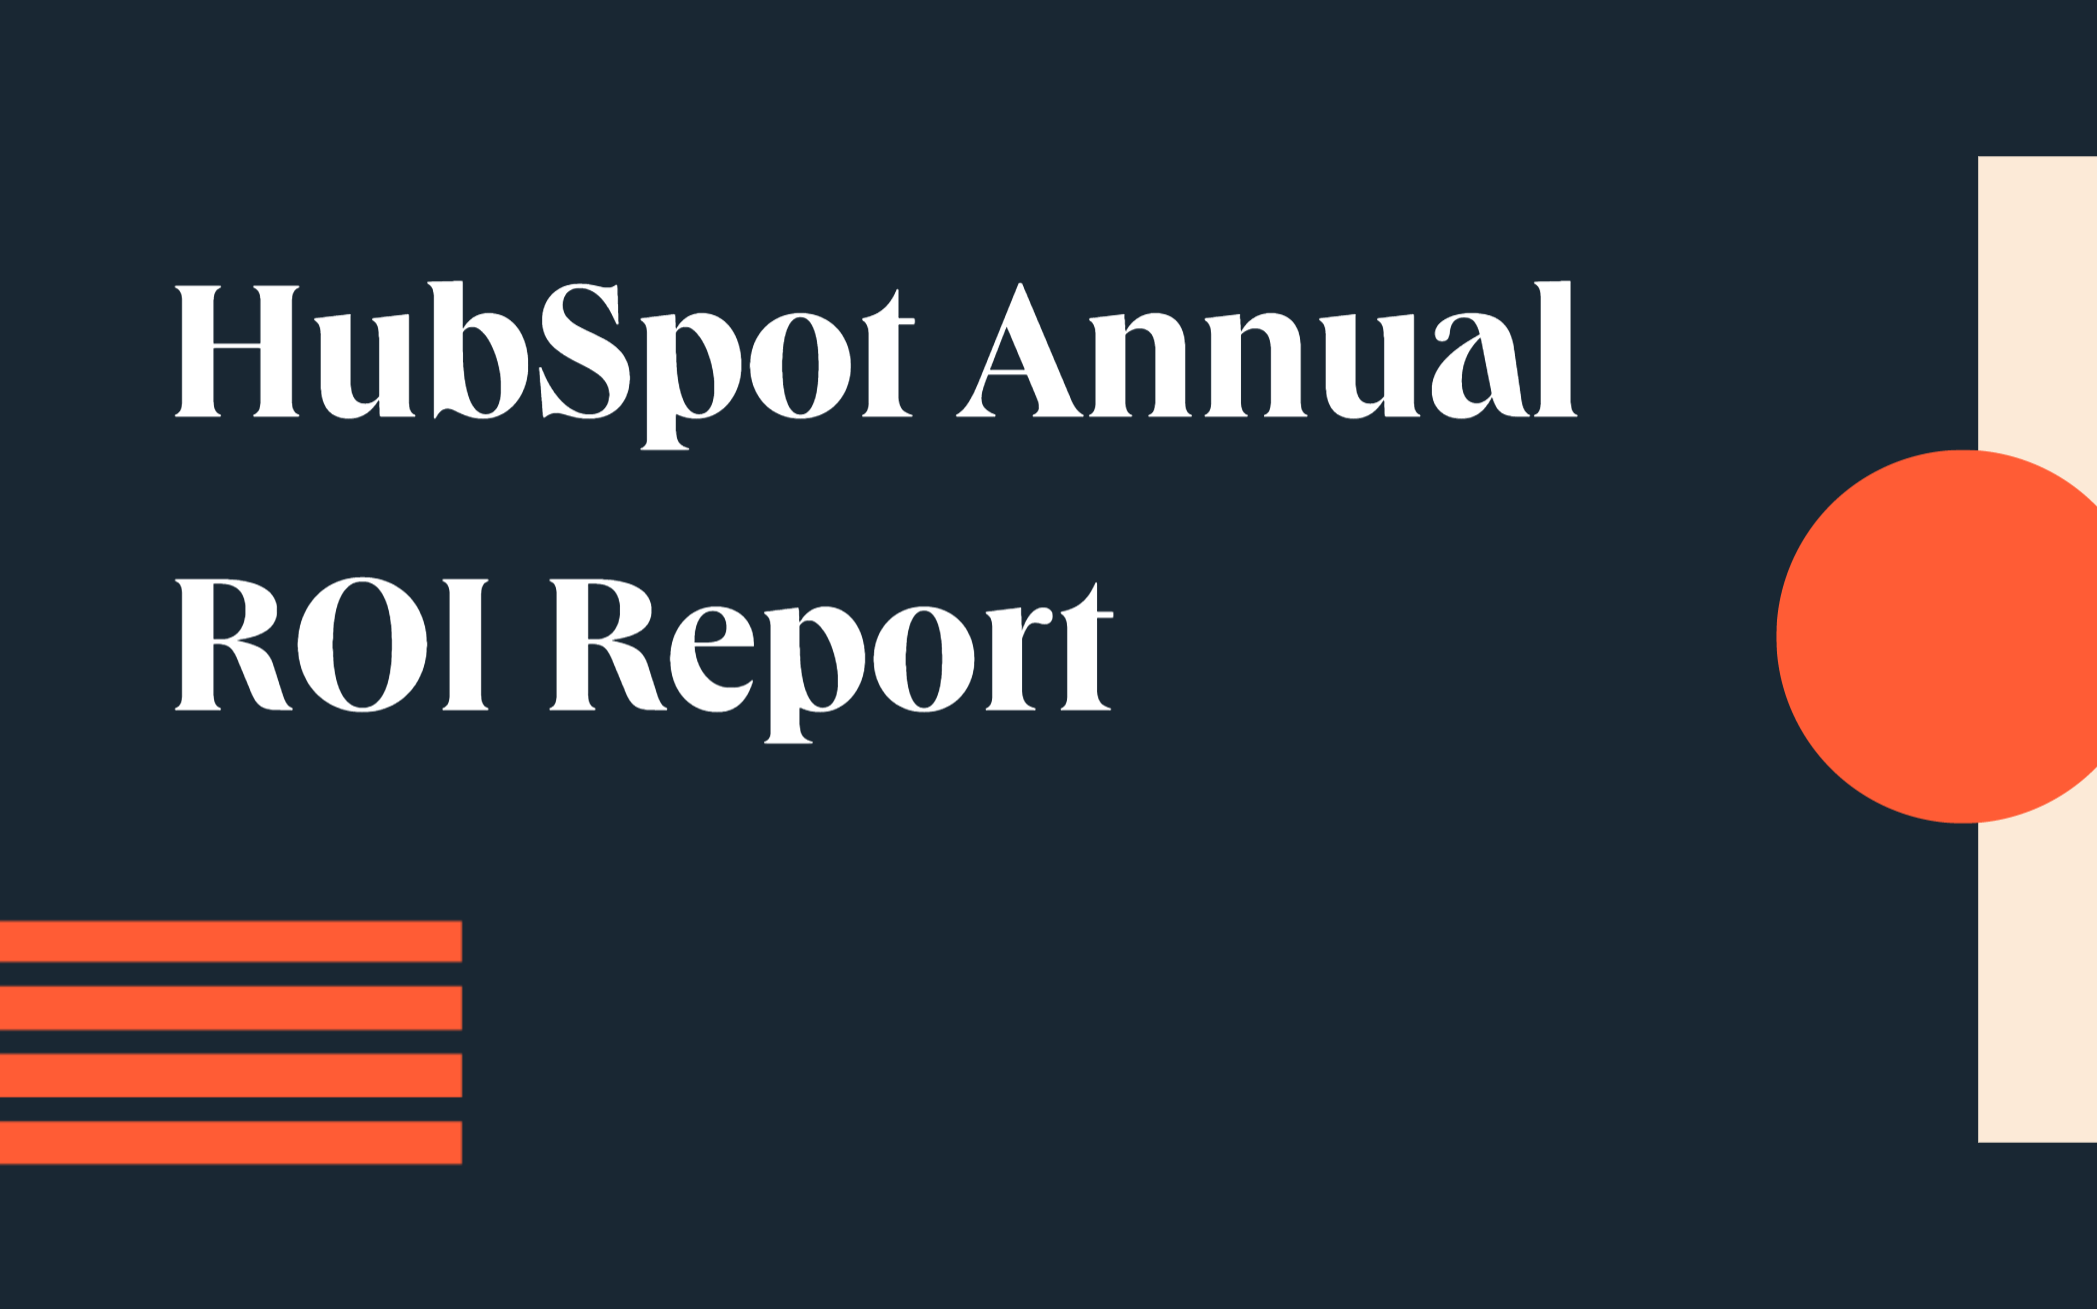 HubSpot Annual ROI Report